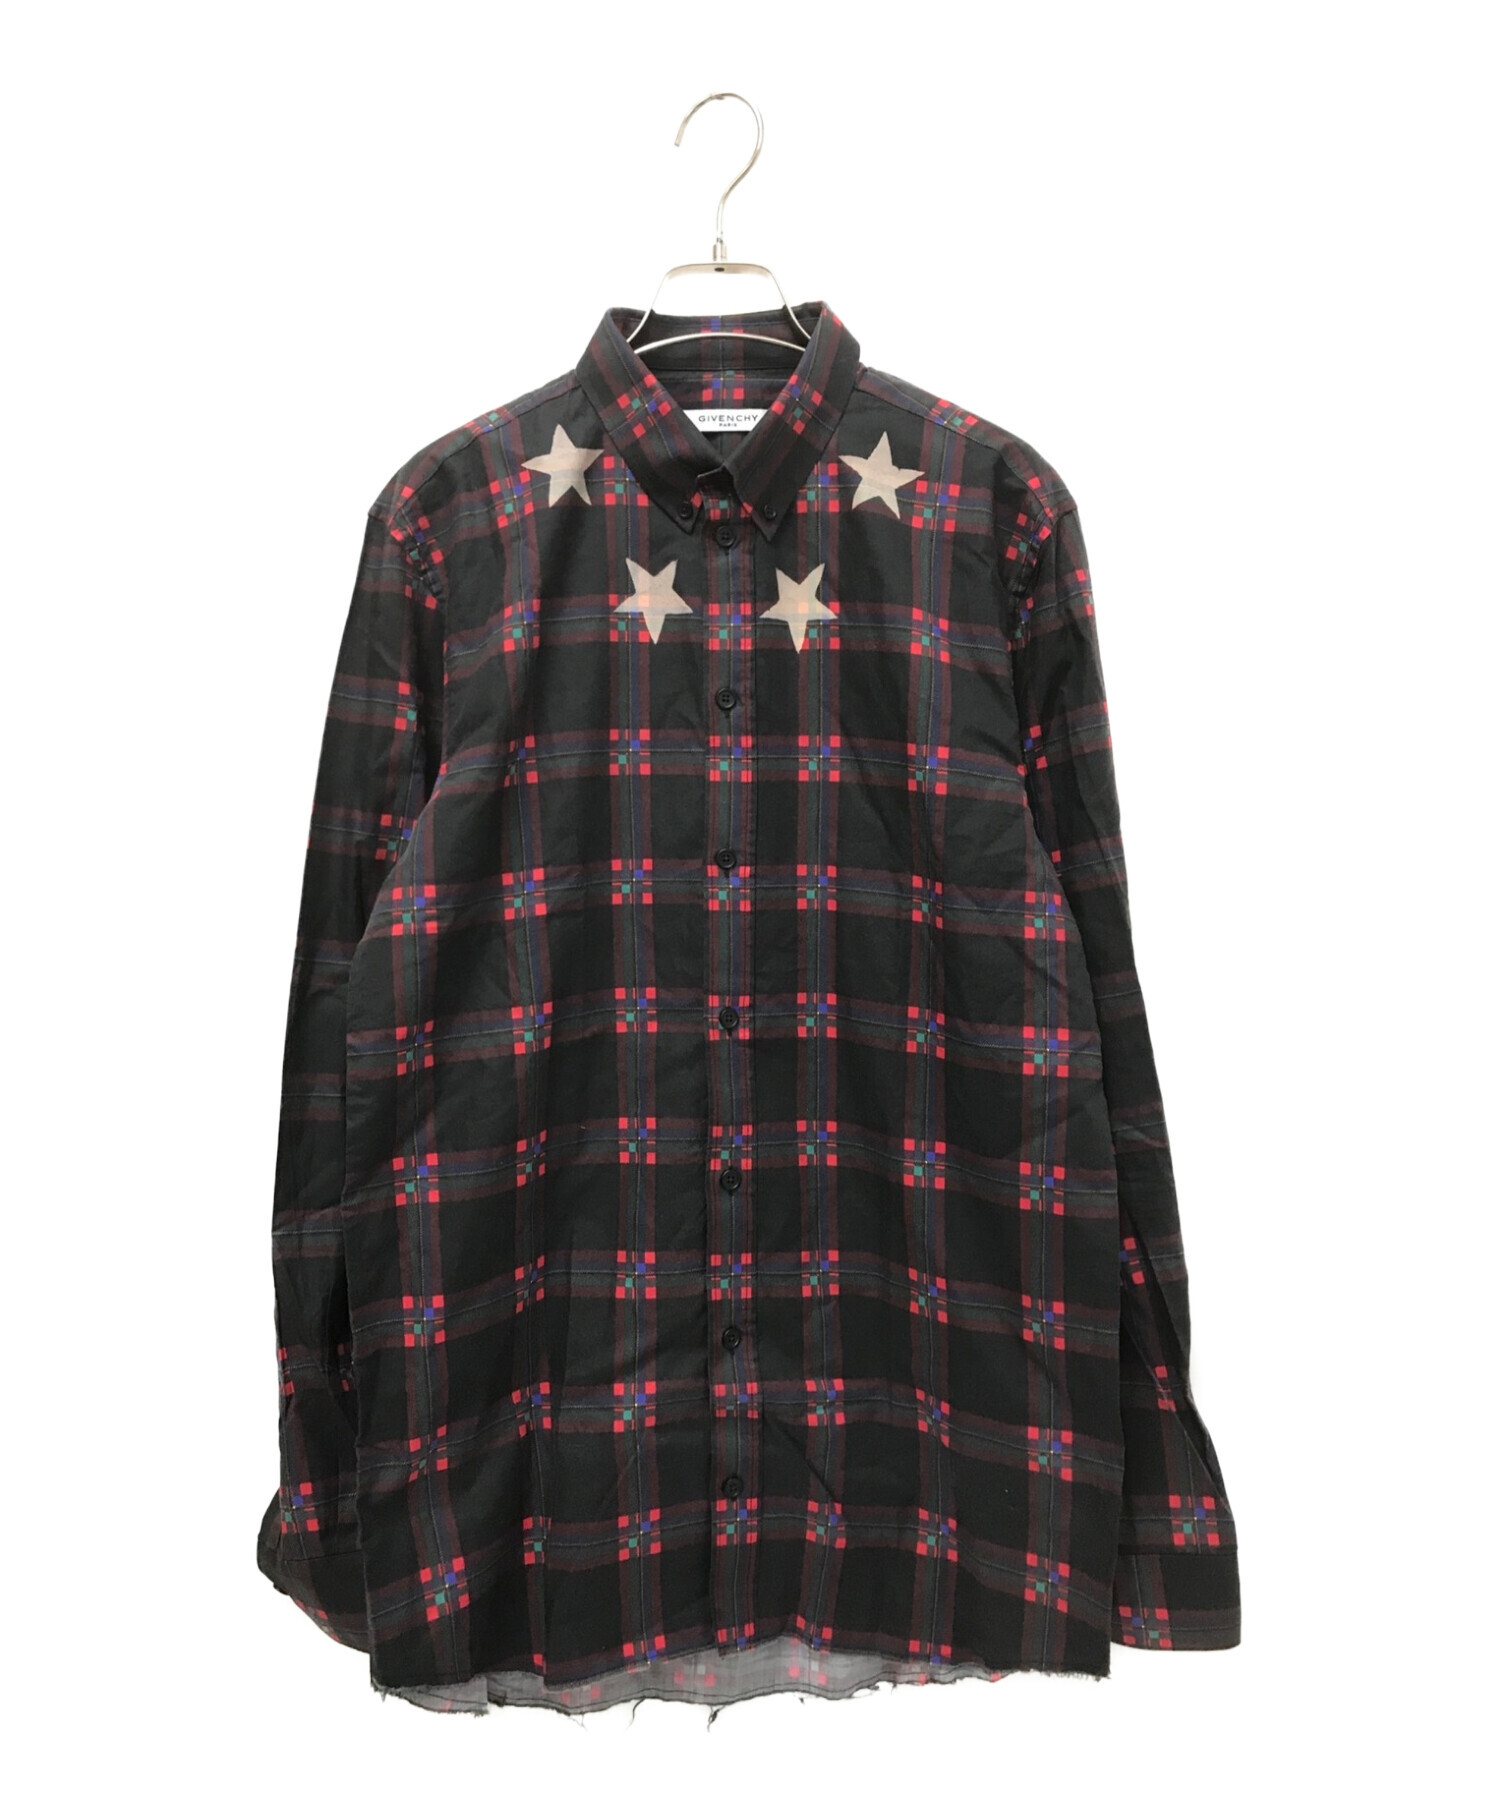 GIVENCHY (ジバンシィ) スタープリントチェックシャツ ブラック×レッド サイズ:39